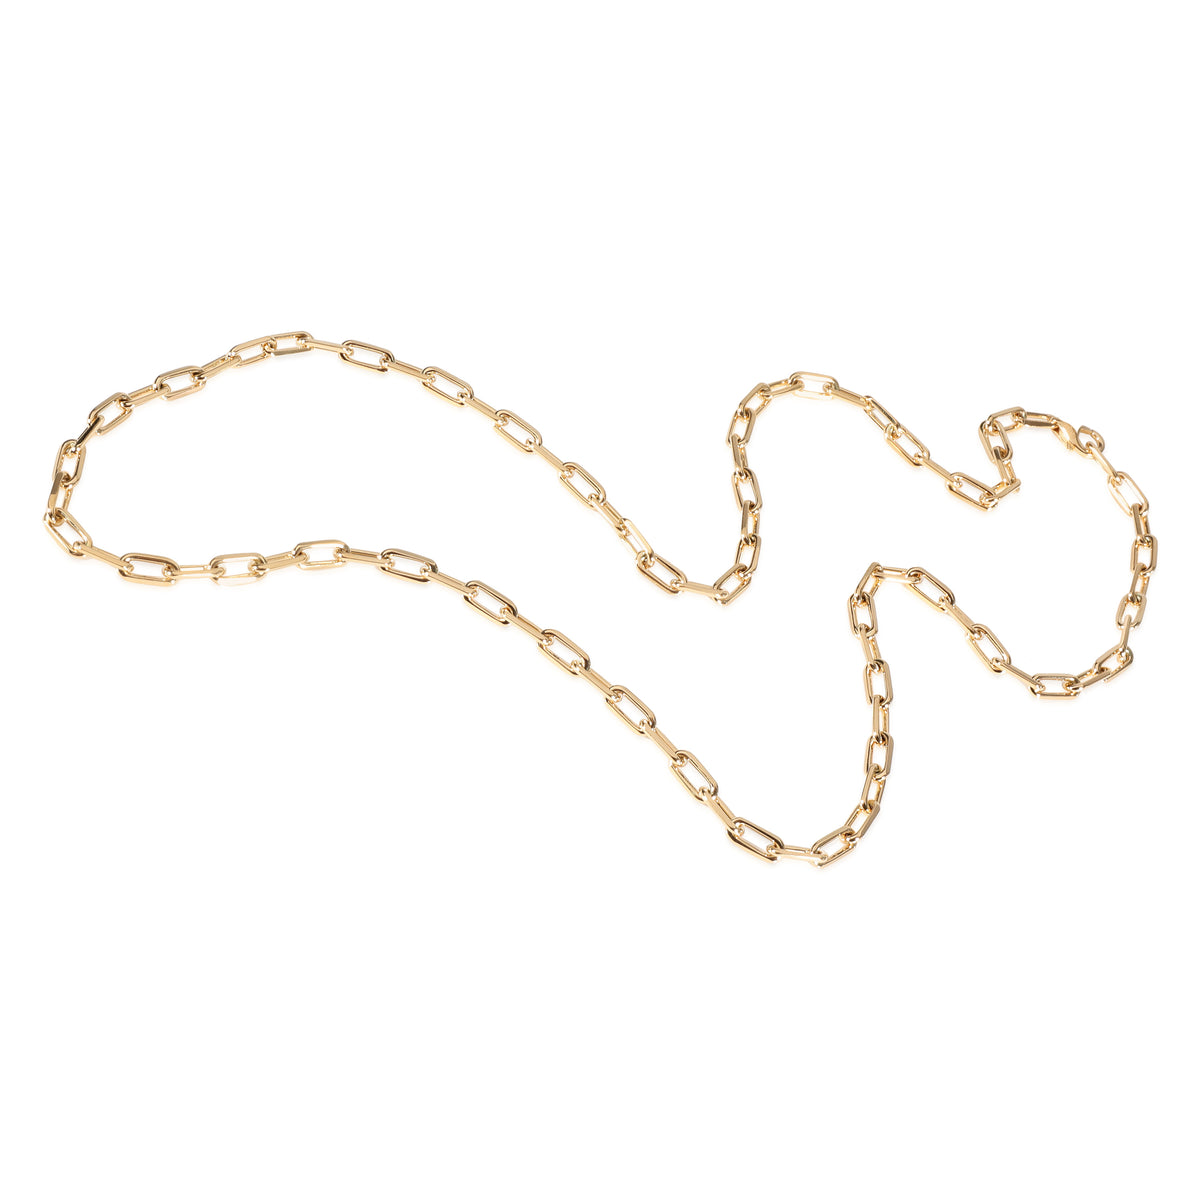 Cartier Santos de Cartier Santos Dumont Chain Necklace in 18K Yellow Gold